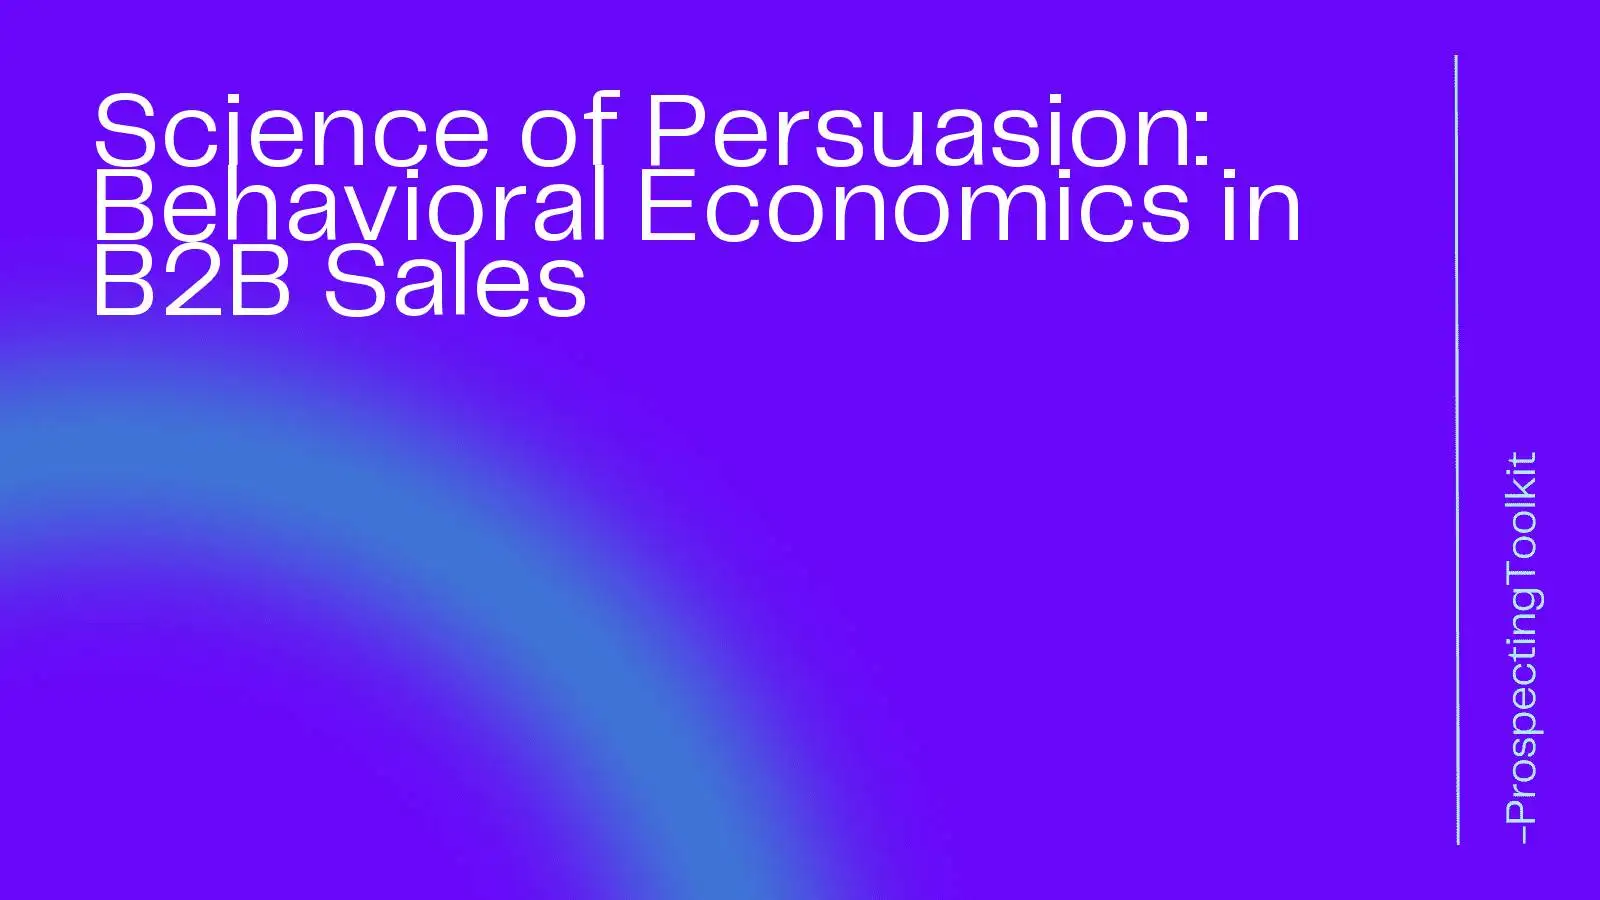 Science of Persuasion: Behavioral Economics in B2B Sales